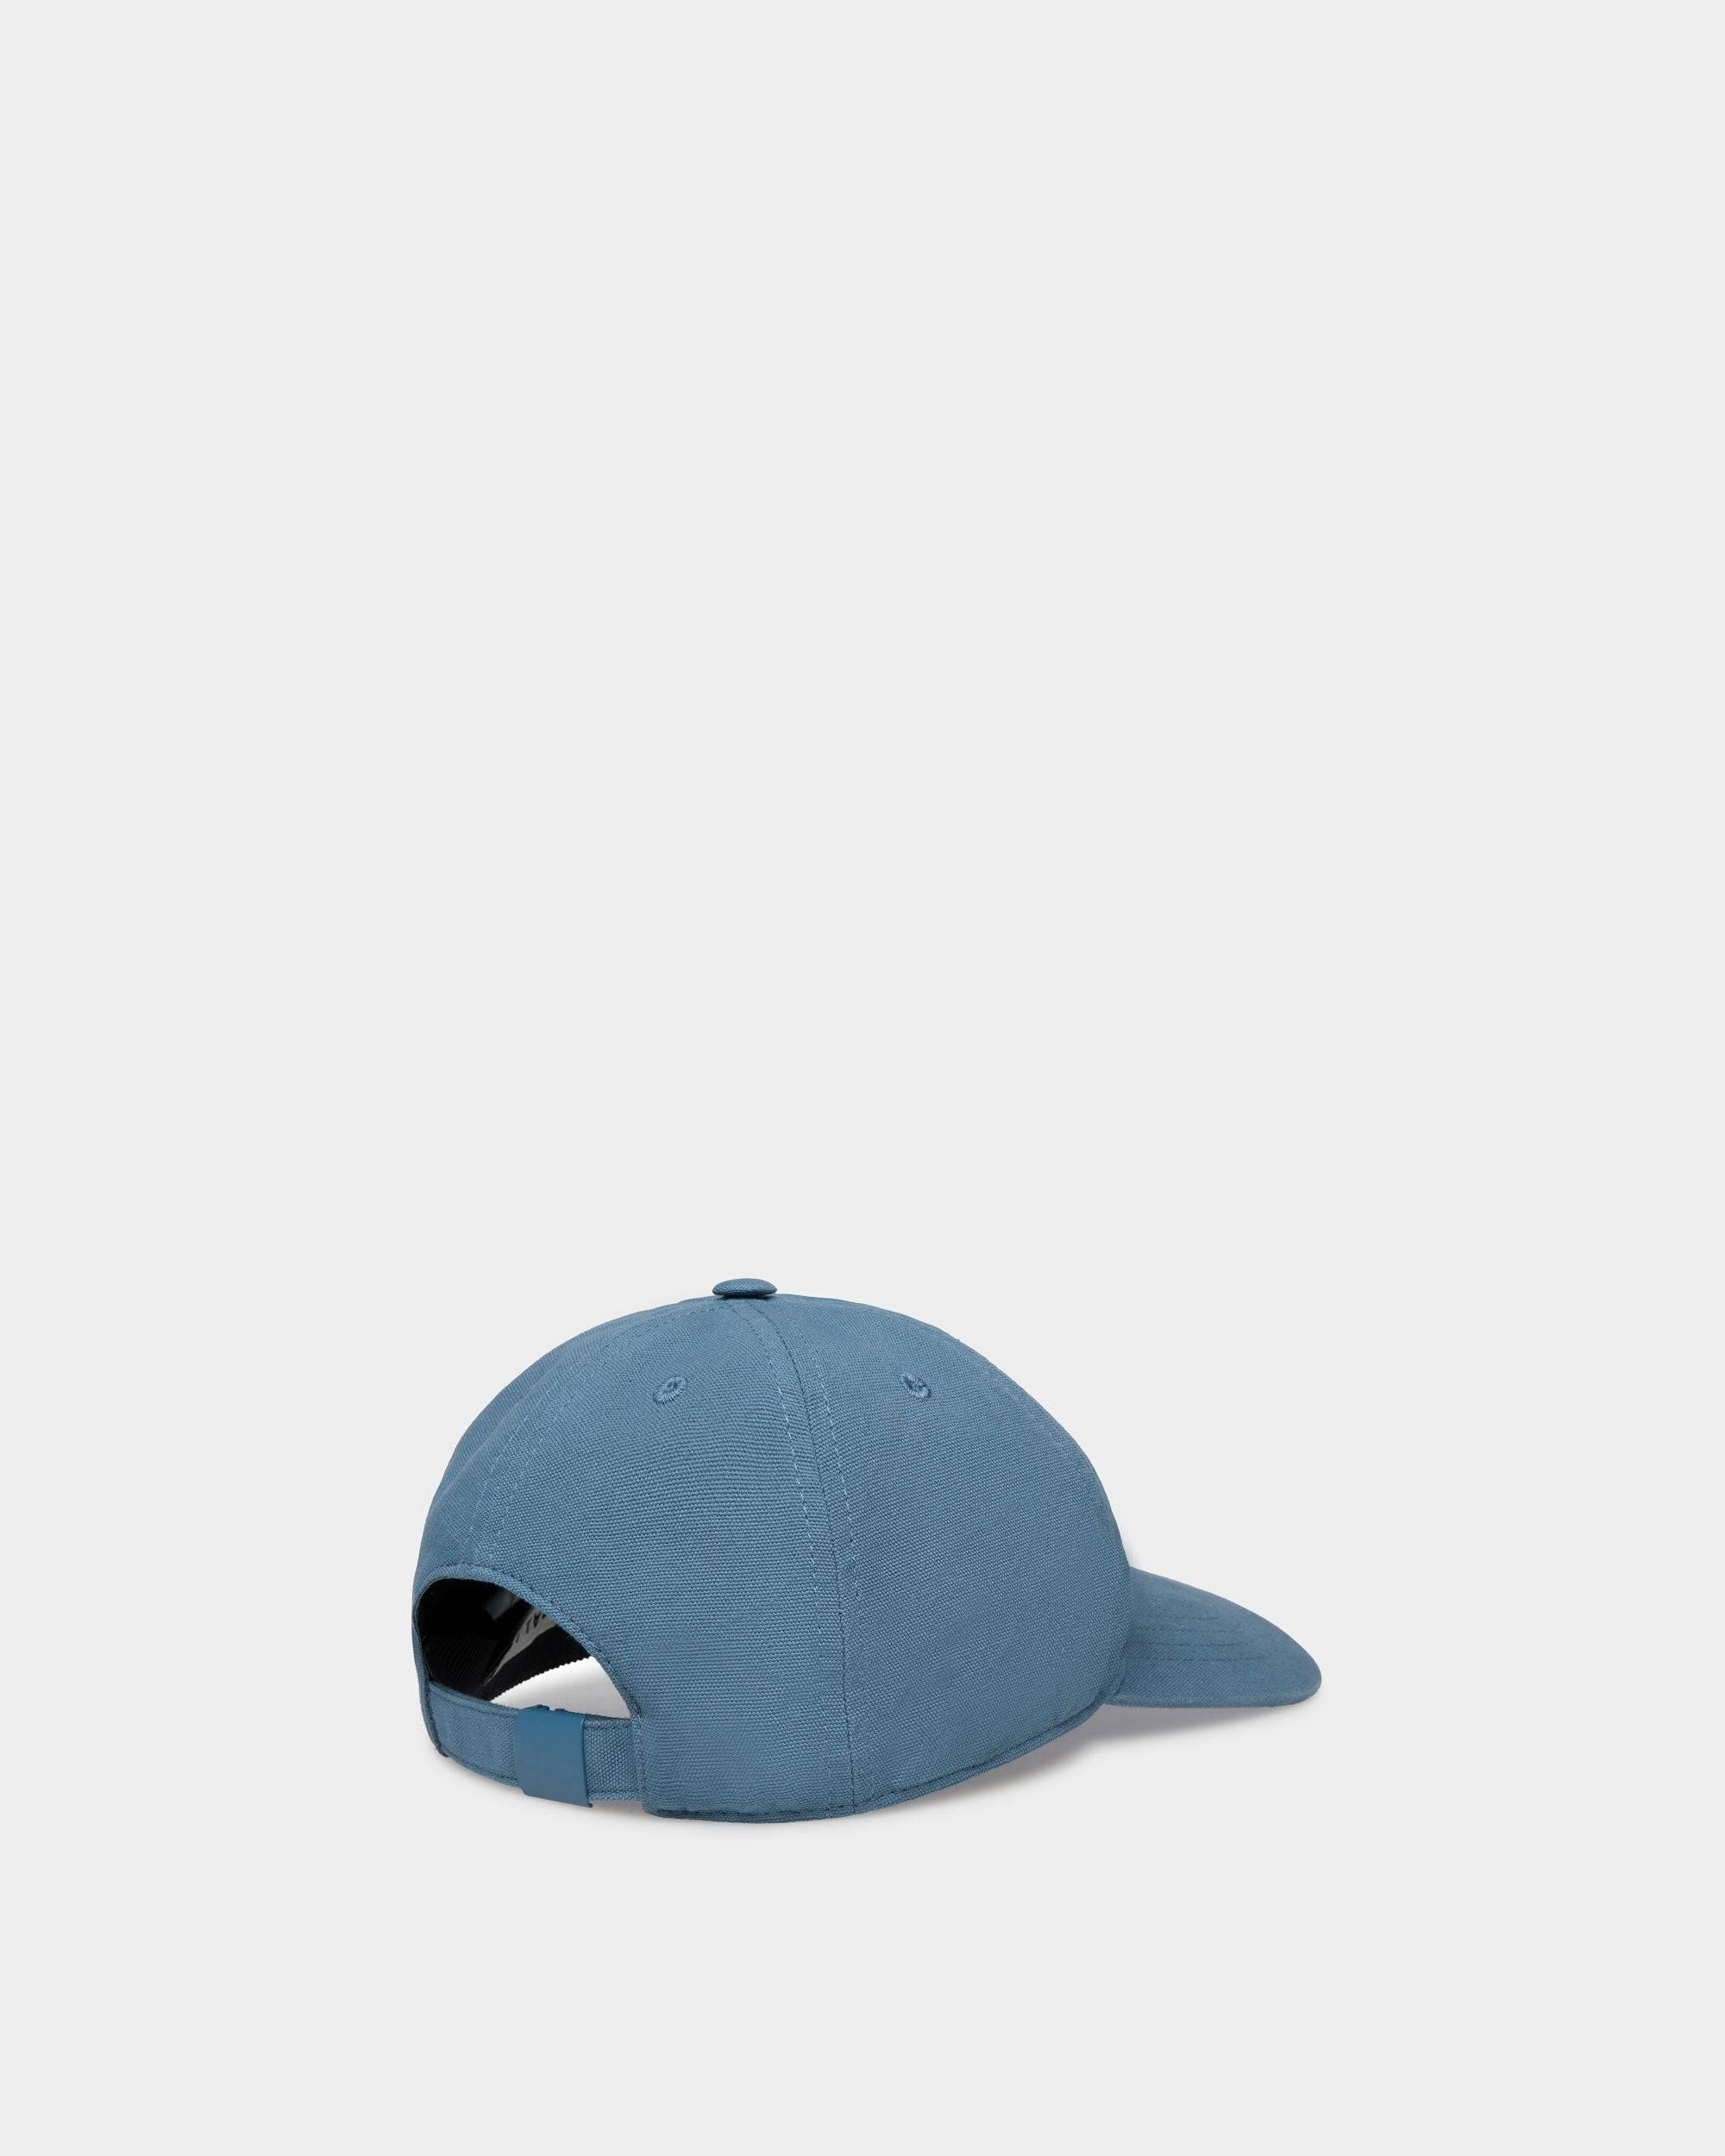 Men's Baseball Hat in Light Blue Cotton | Bally | Still Life 3/4 Back